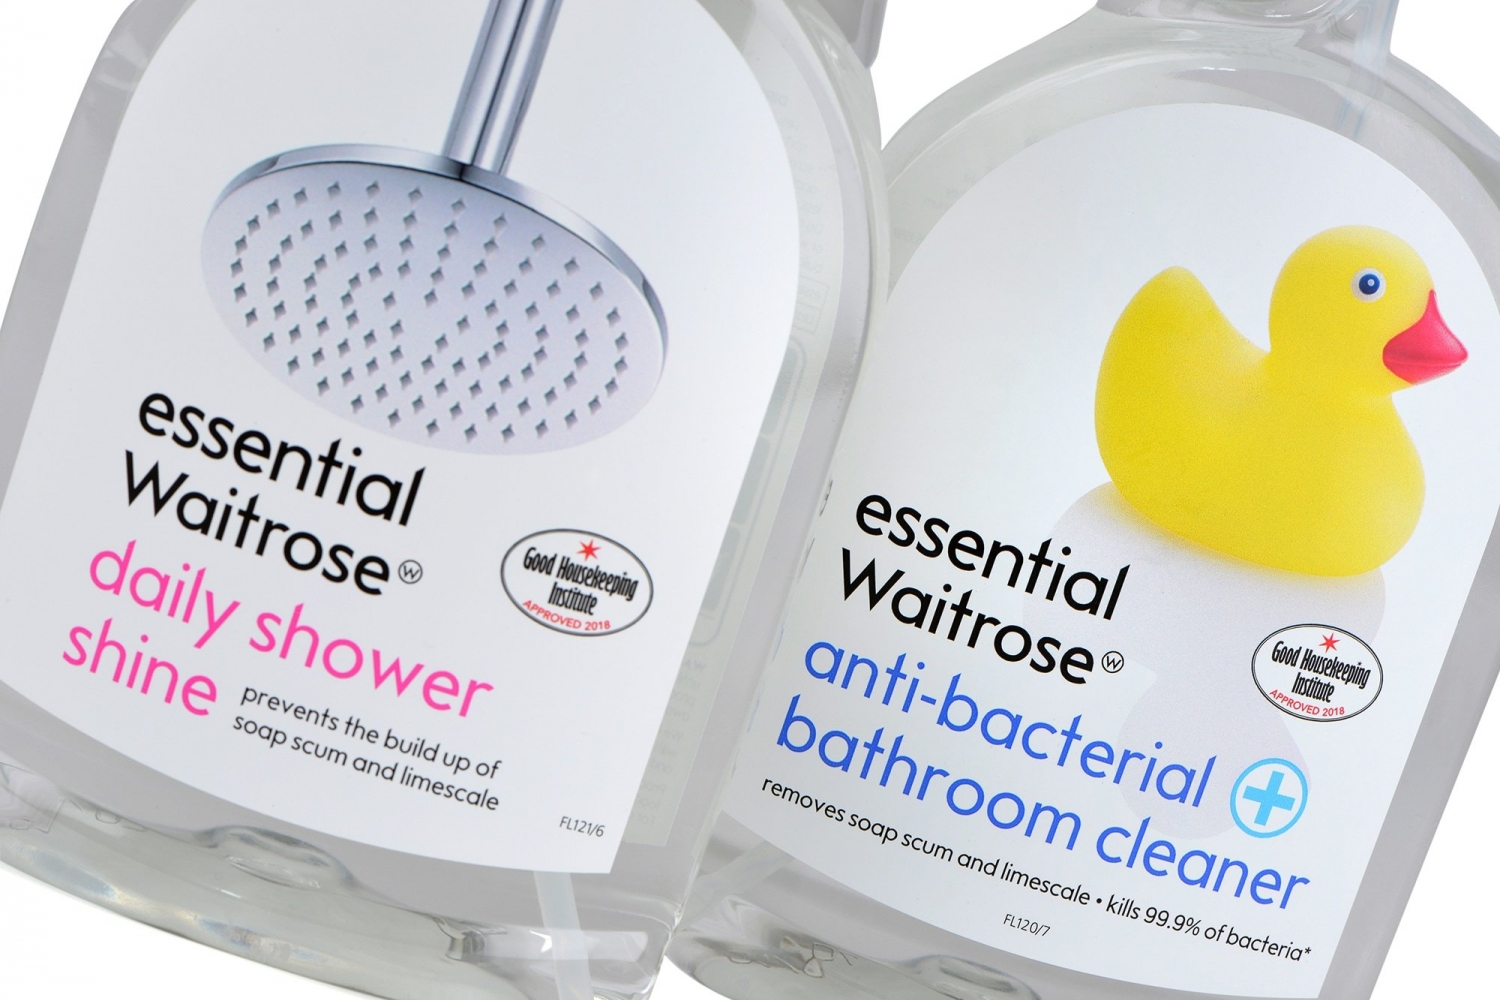 Essential Waitrose Bathroomcleaner 1